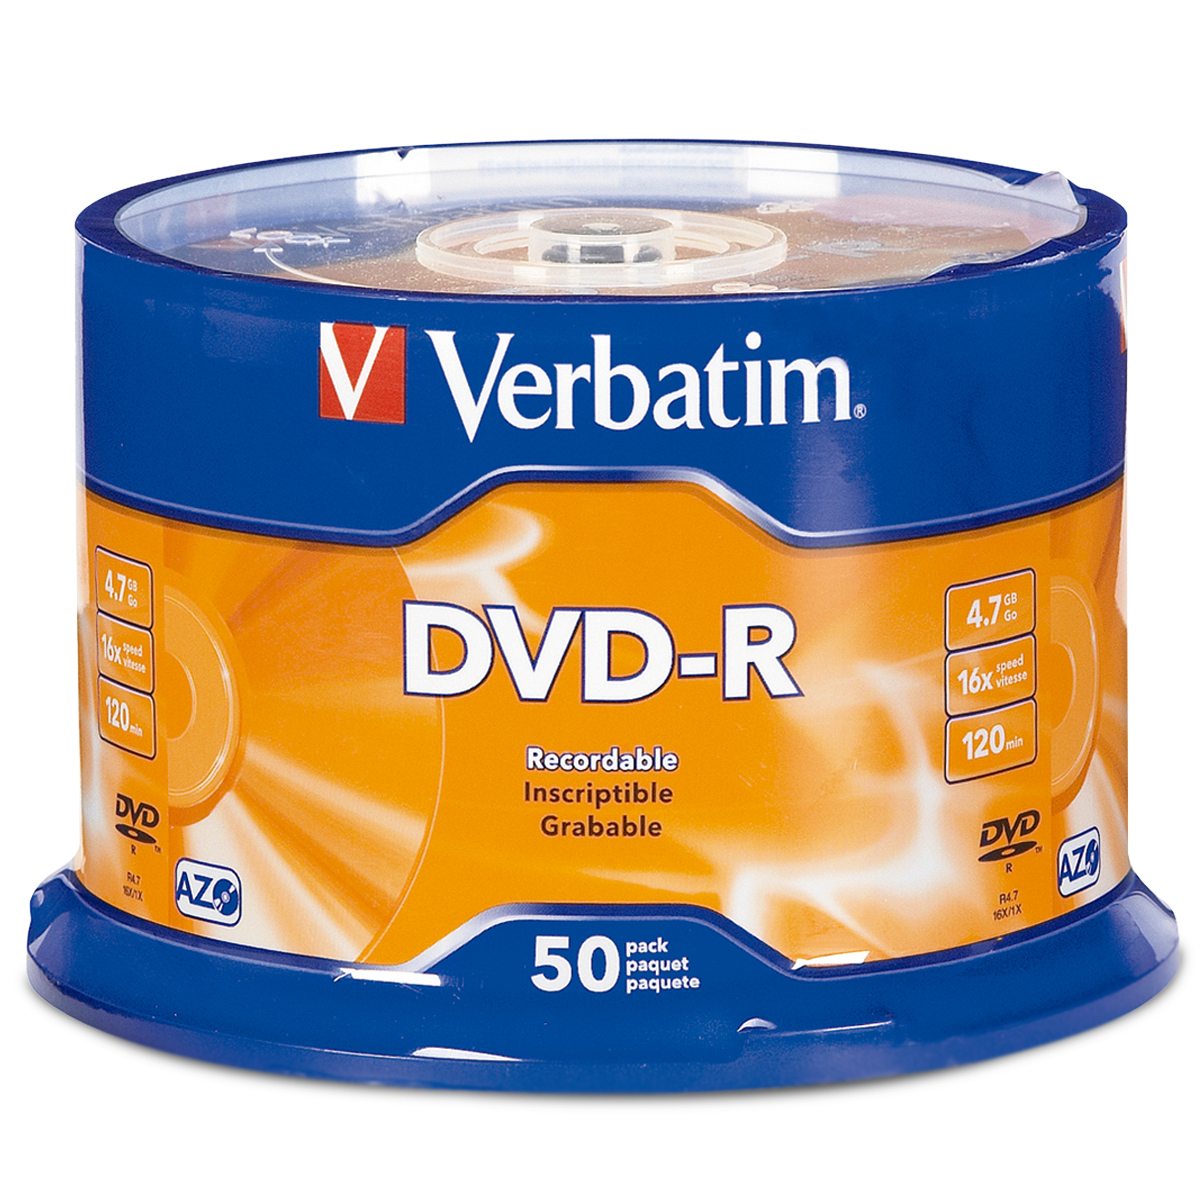 DVD-R Verbatim 95101  gb 16x 120 min. Empaque 50 piezas | Office Depot  Mexico